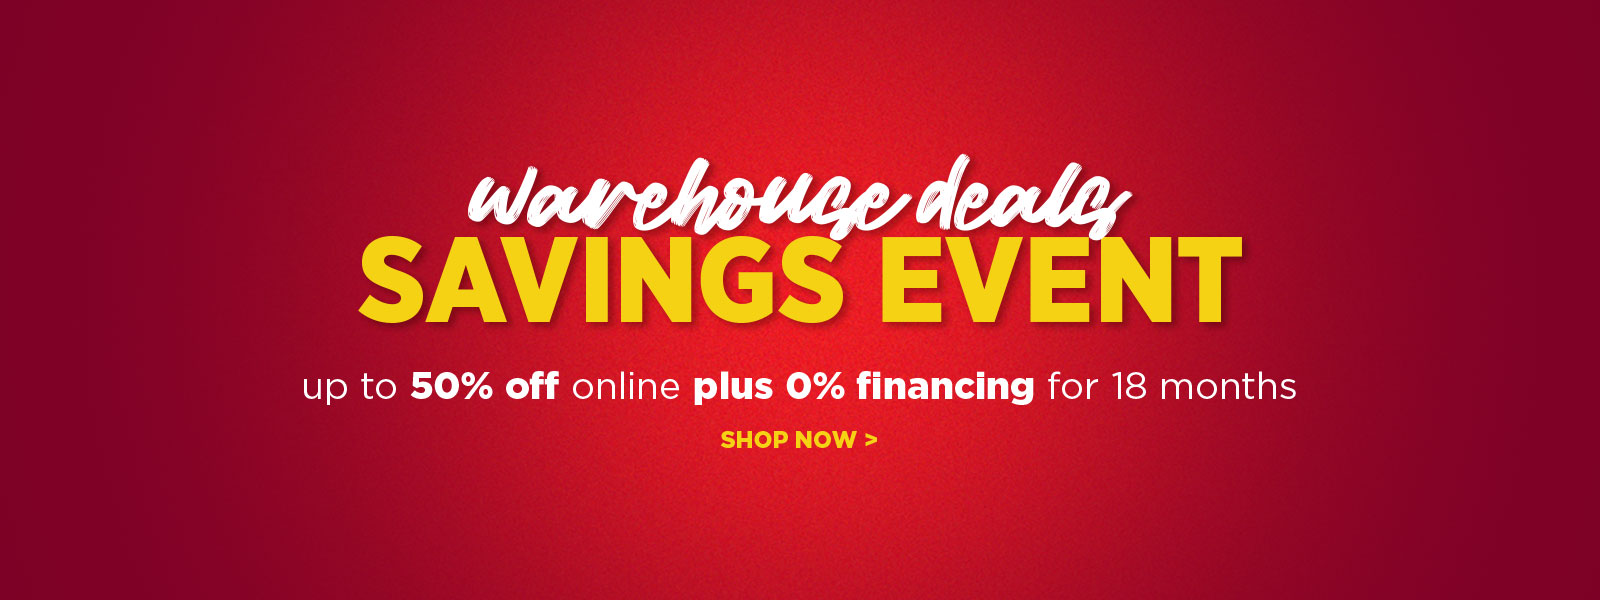 Warehouse Deals Savings Event - Shop Now